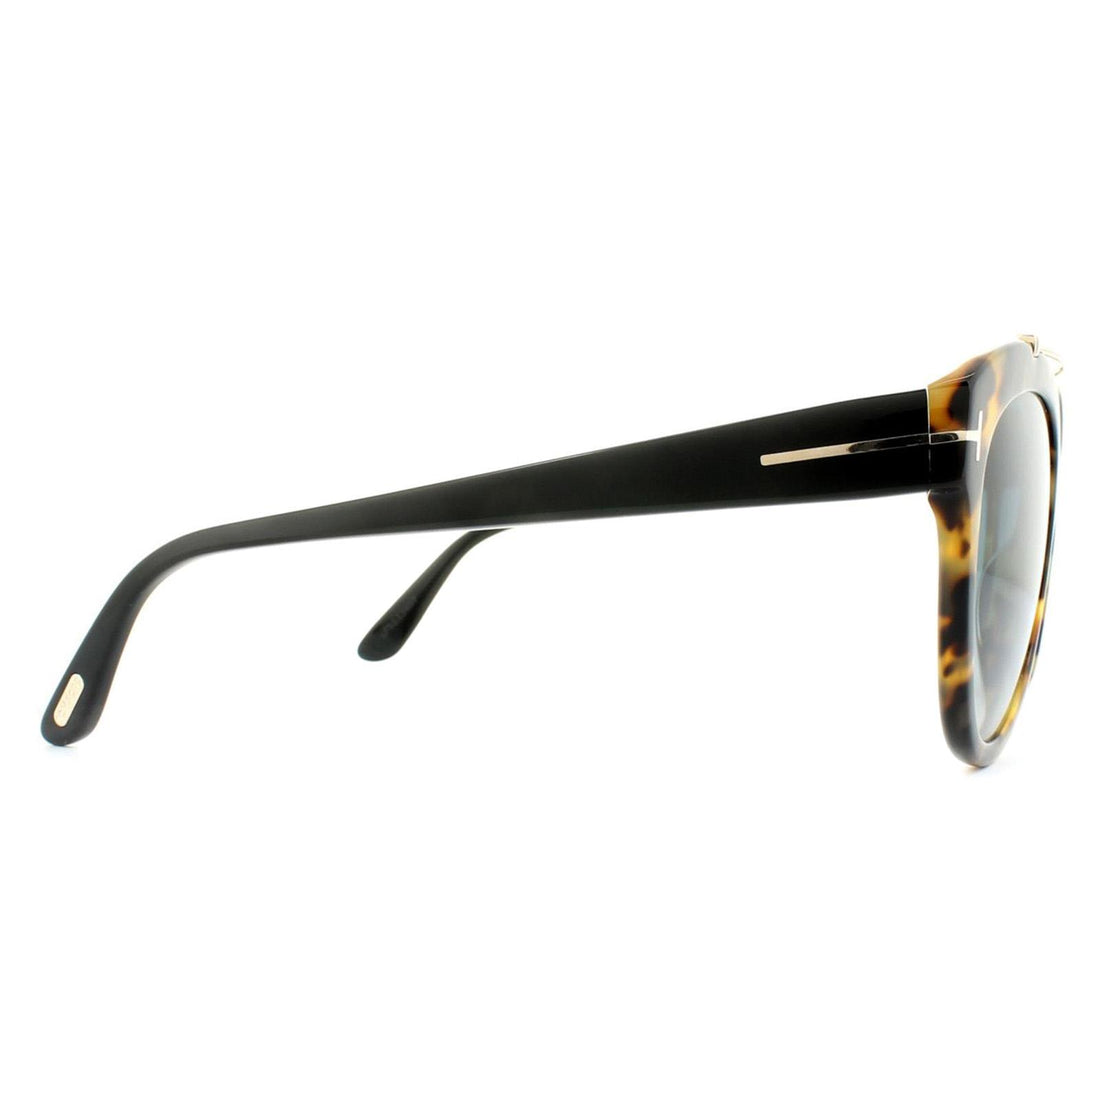 Tom Ford Sunglasses 0518 Livia 56W Havana Blue Gradient